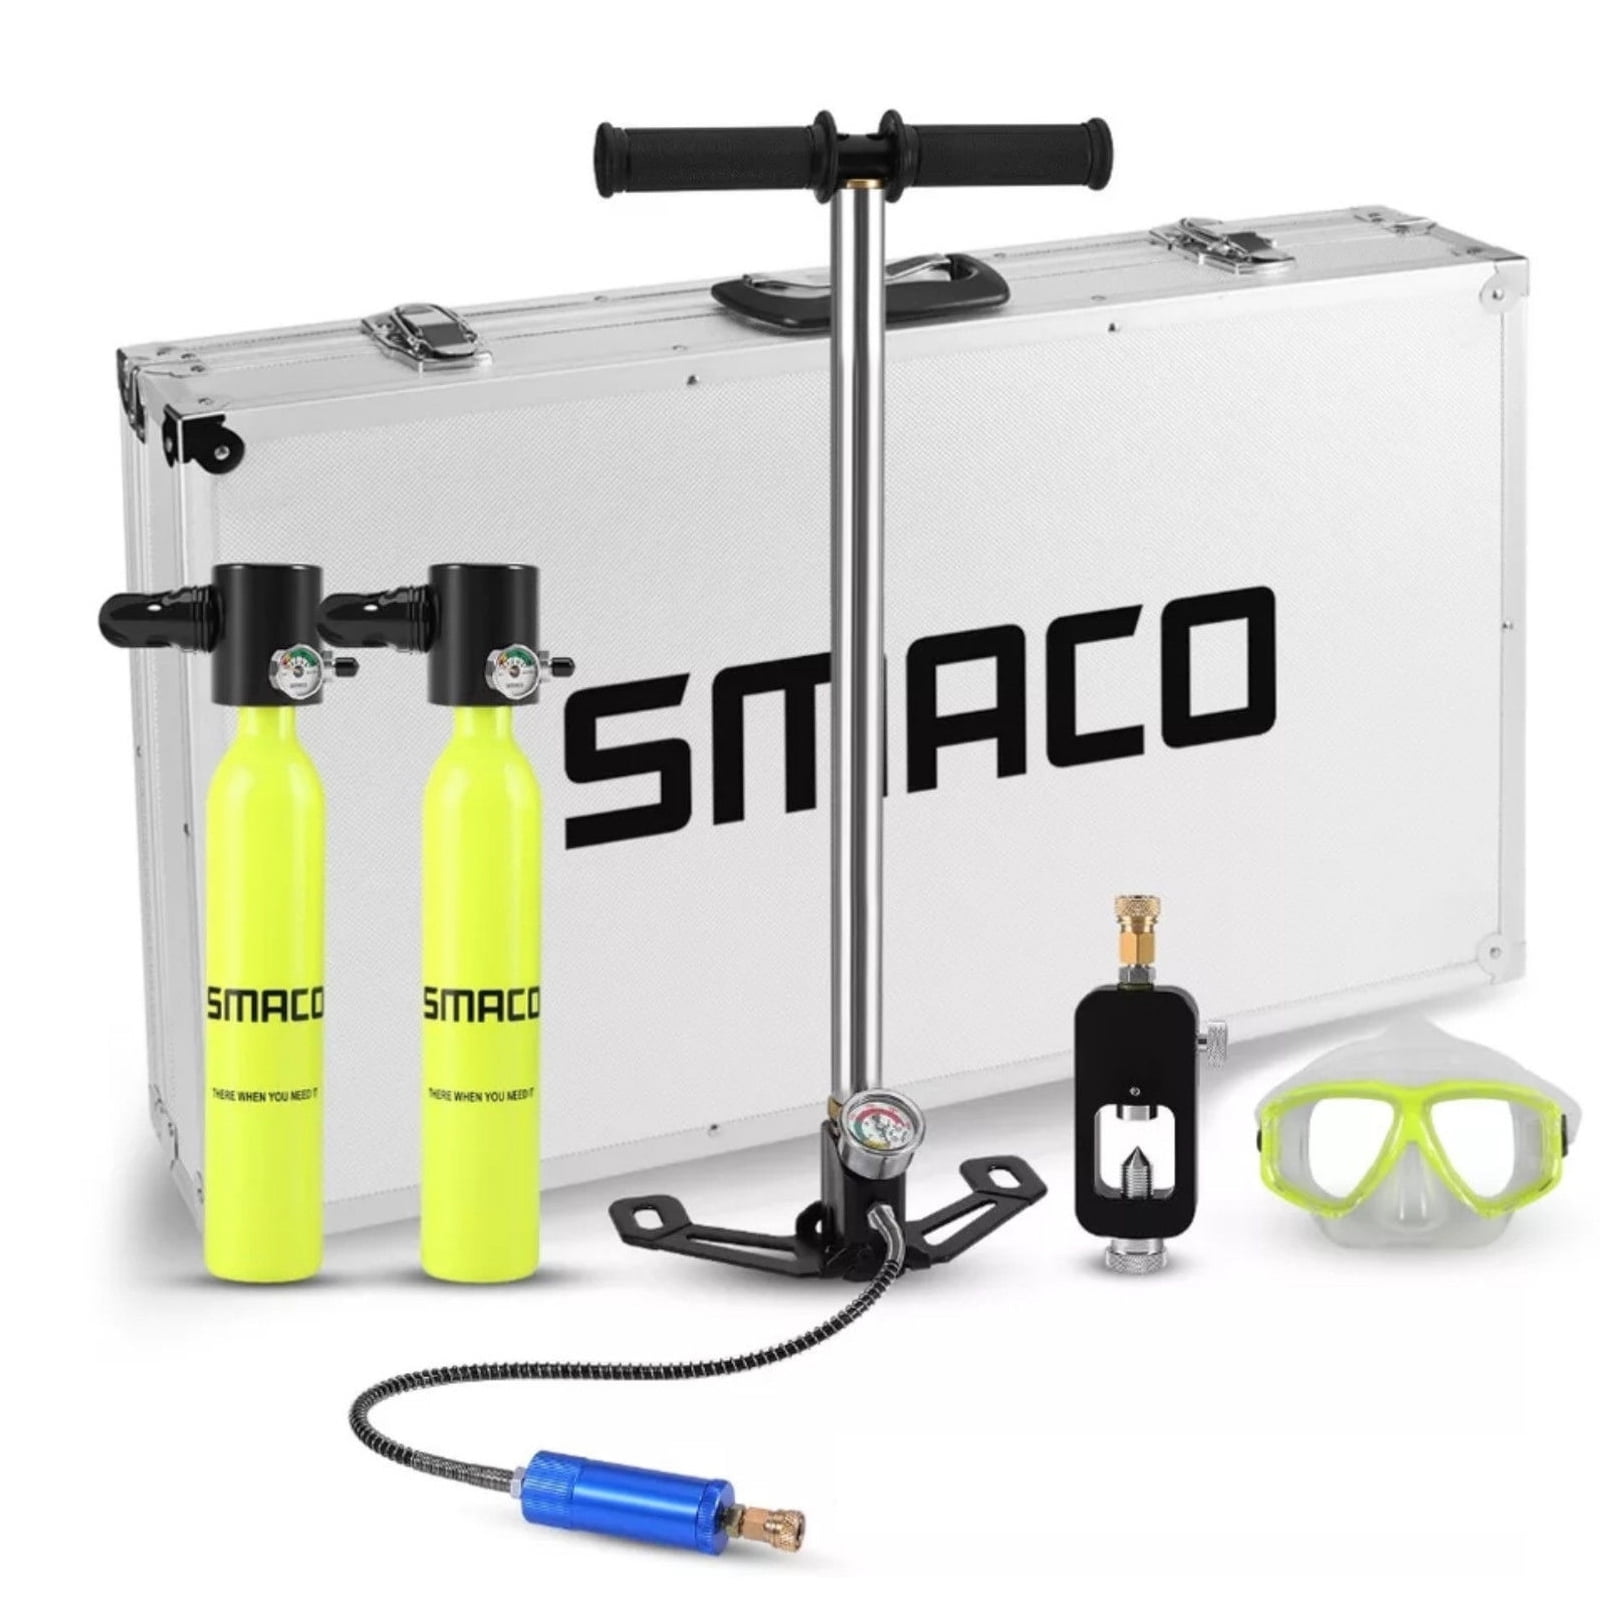 SMACO Oxygen Cylinder Mini Scuba Oxygen Reserve Air Tank Diving Equipment Set with Aluminum Box